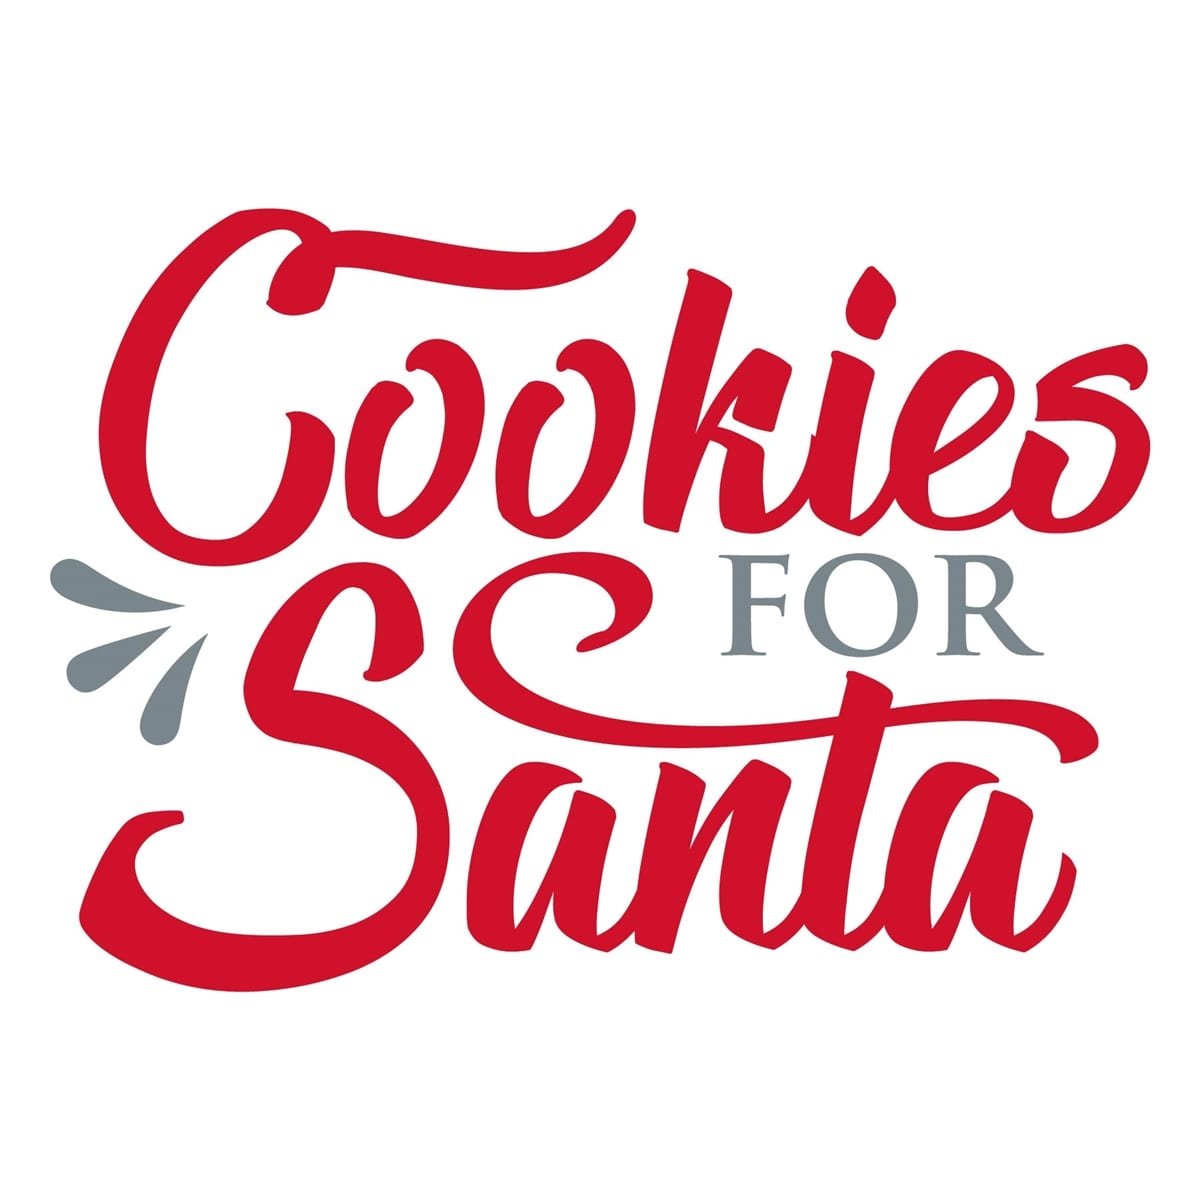 Cookies For Santa Svg